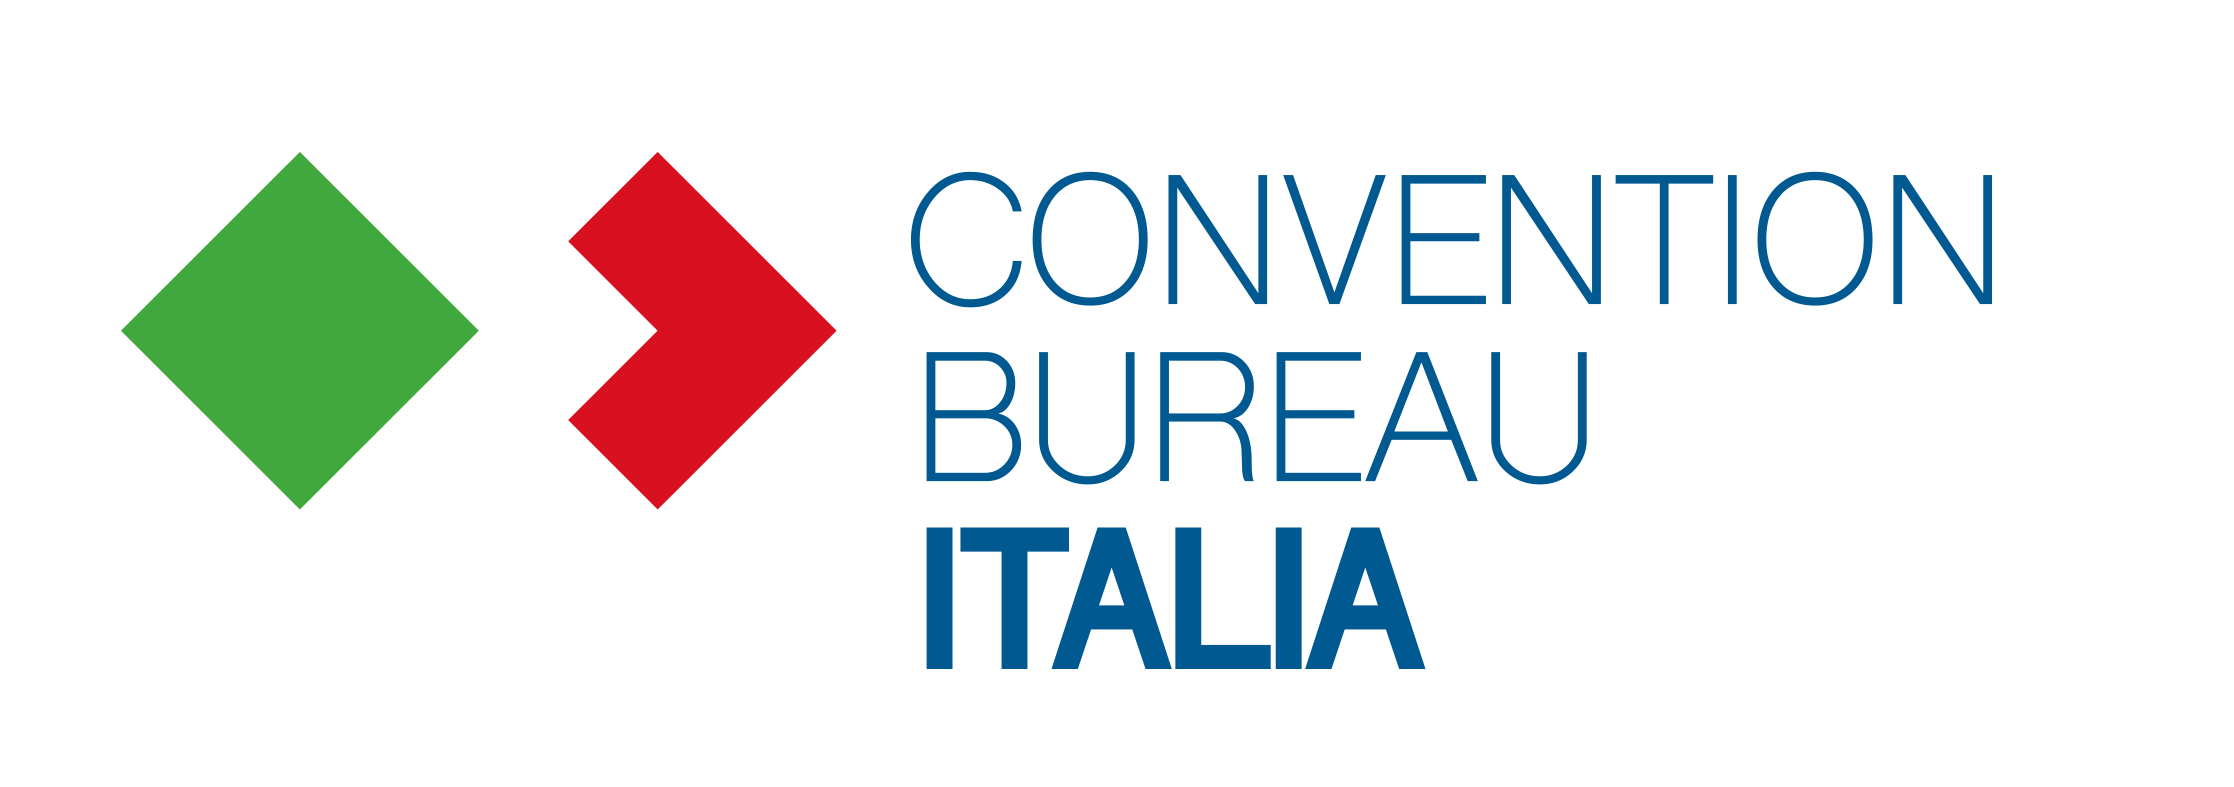 Convention-Bureau-Italia